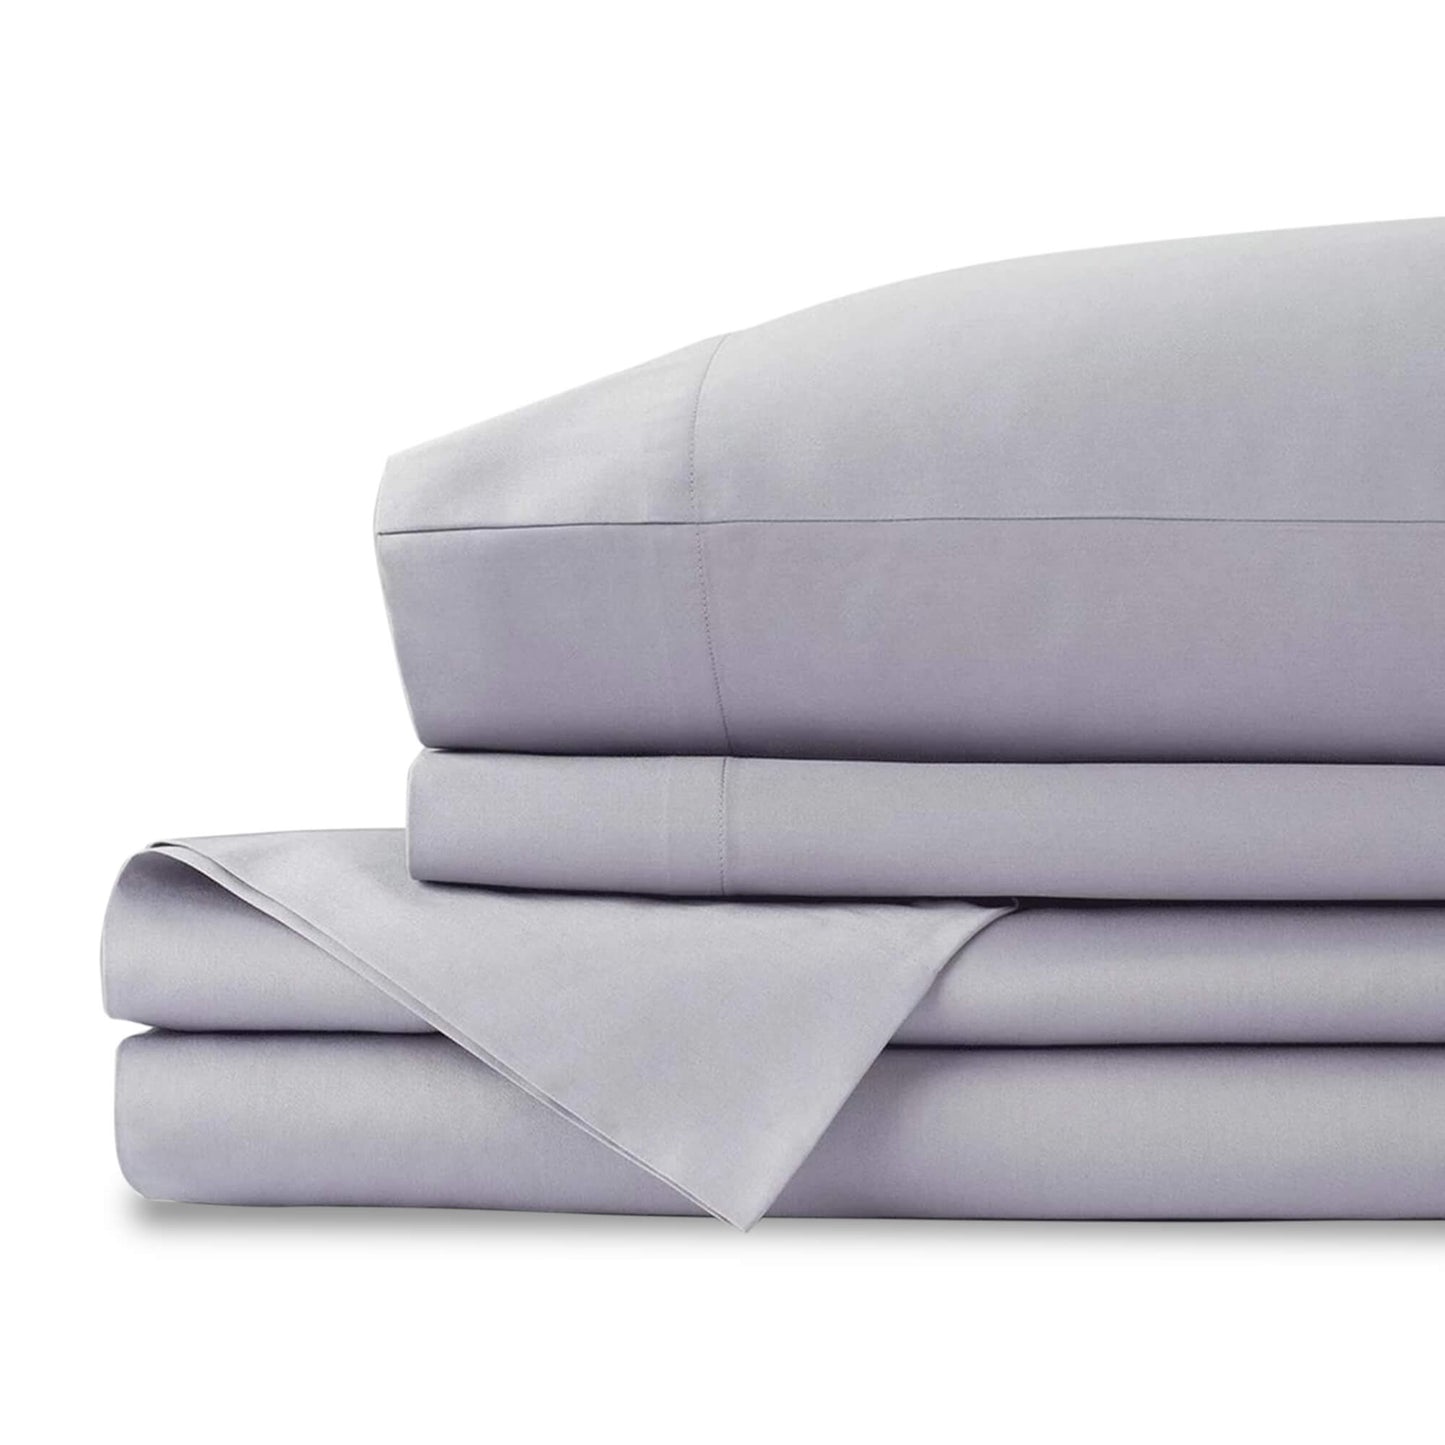 Delilah Home 100% Organic Cotton Bed Sheets
Jungle Pillows